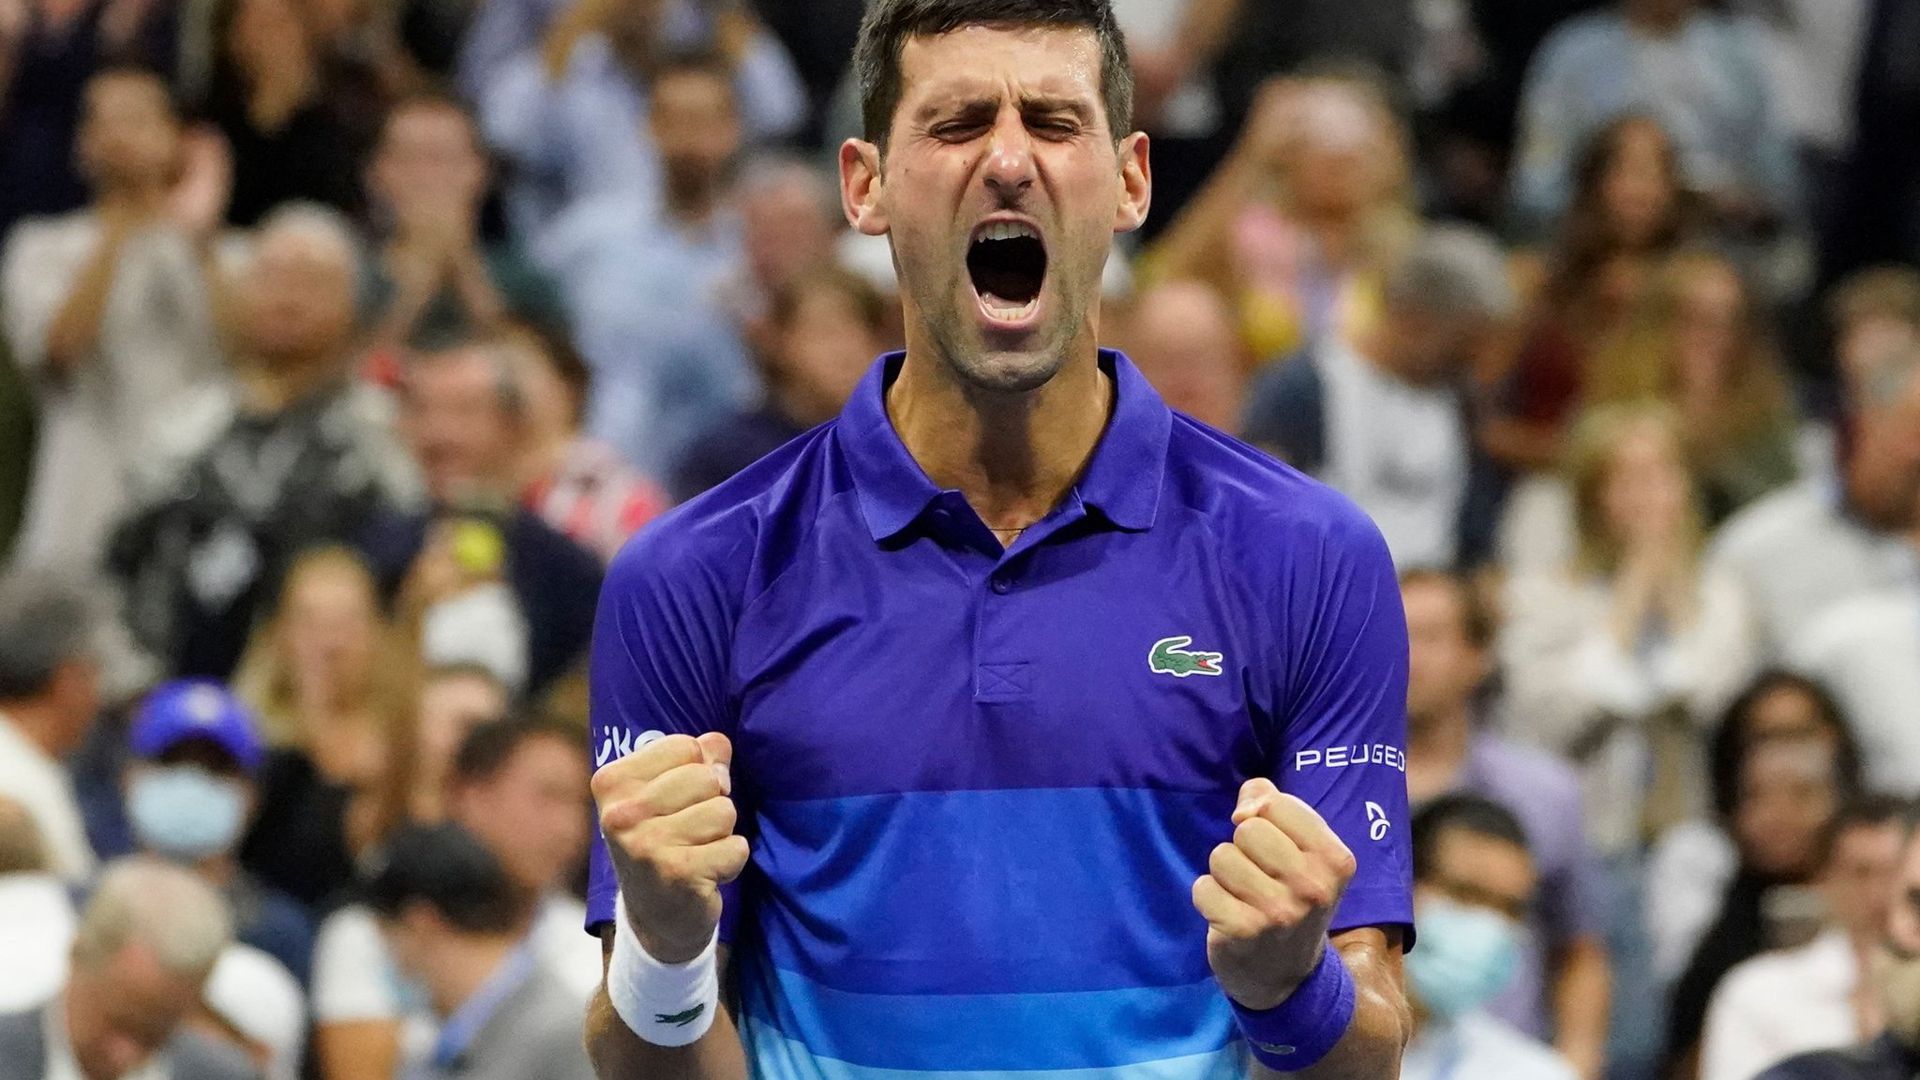 Novak Djokovic im Moment seines Sieges.